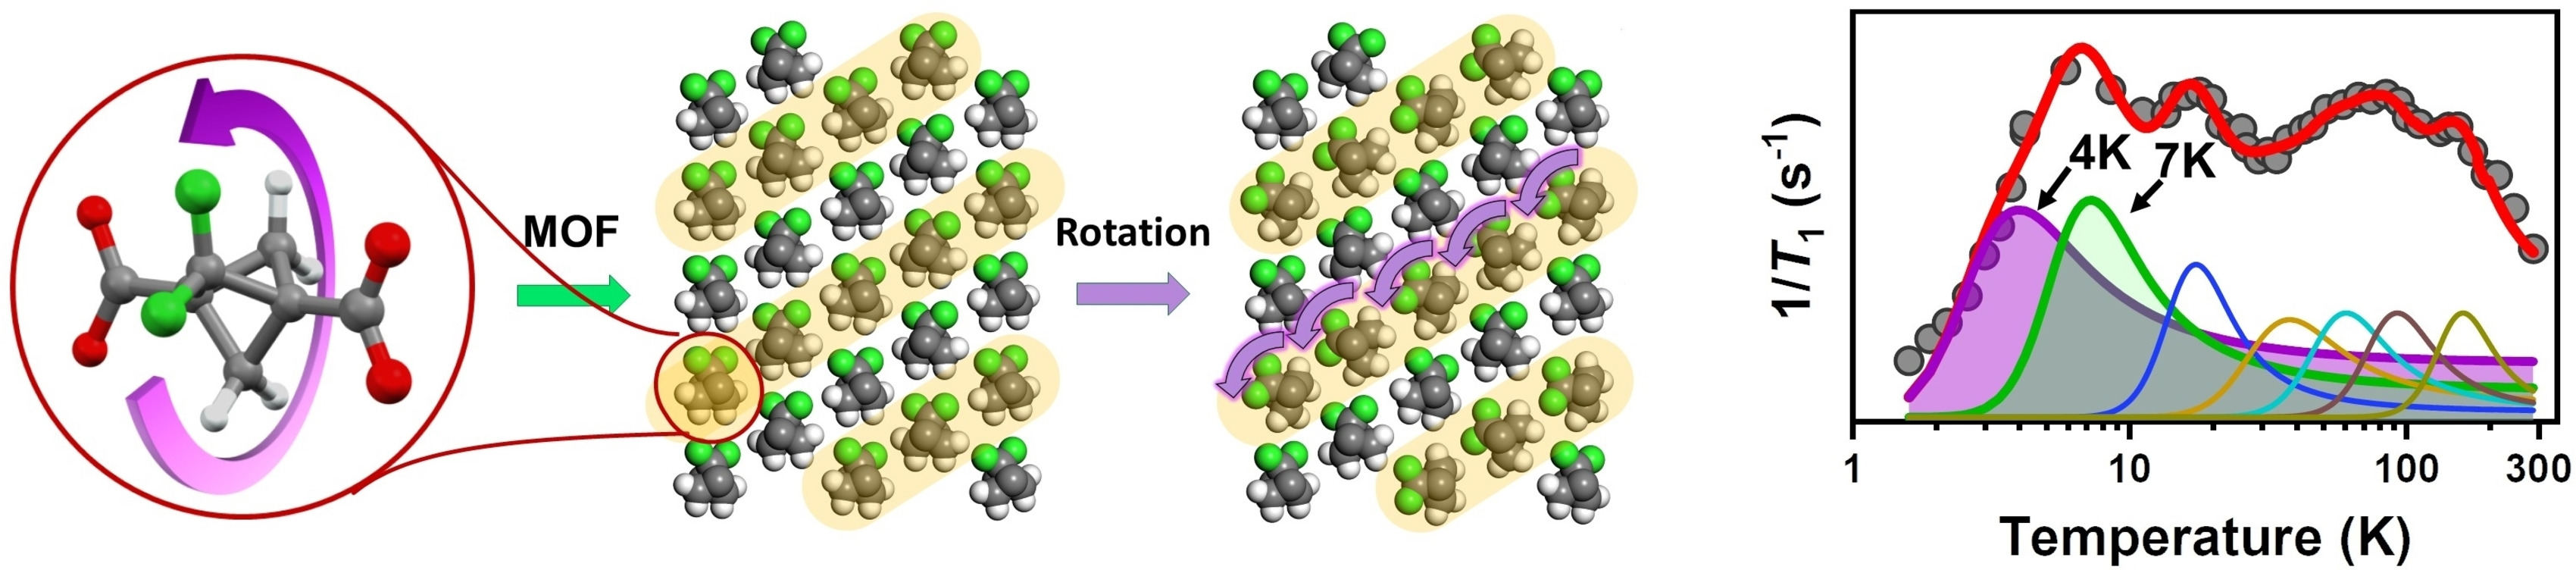 Benchmark Dynamics of Dipolar Molecular Rotors in Fluorinated Metal-Organic Frameworks